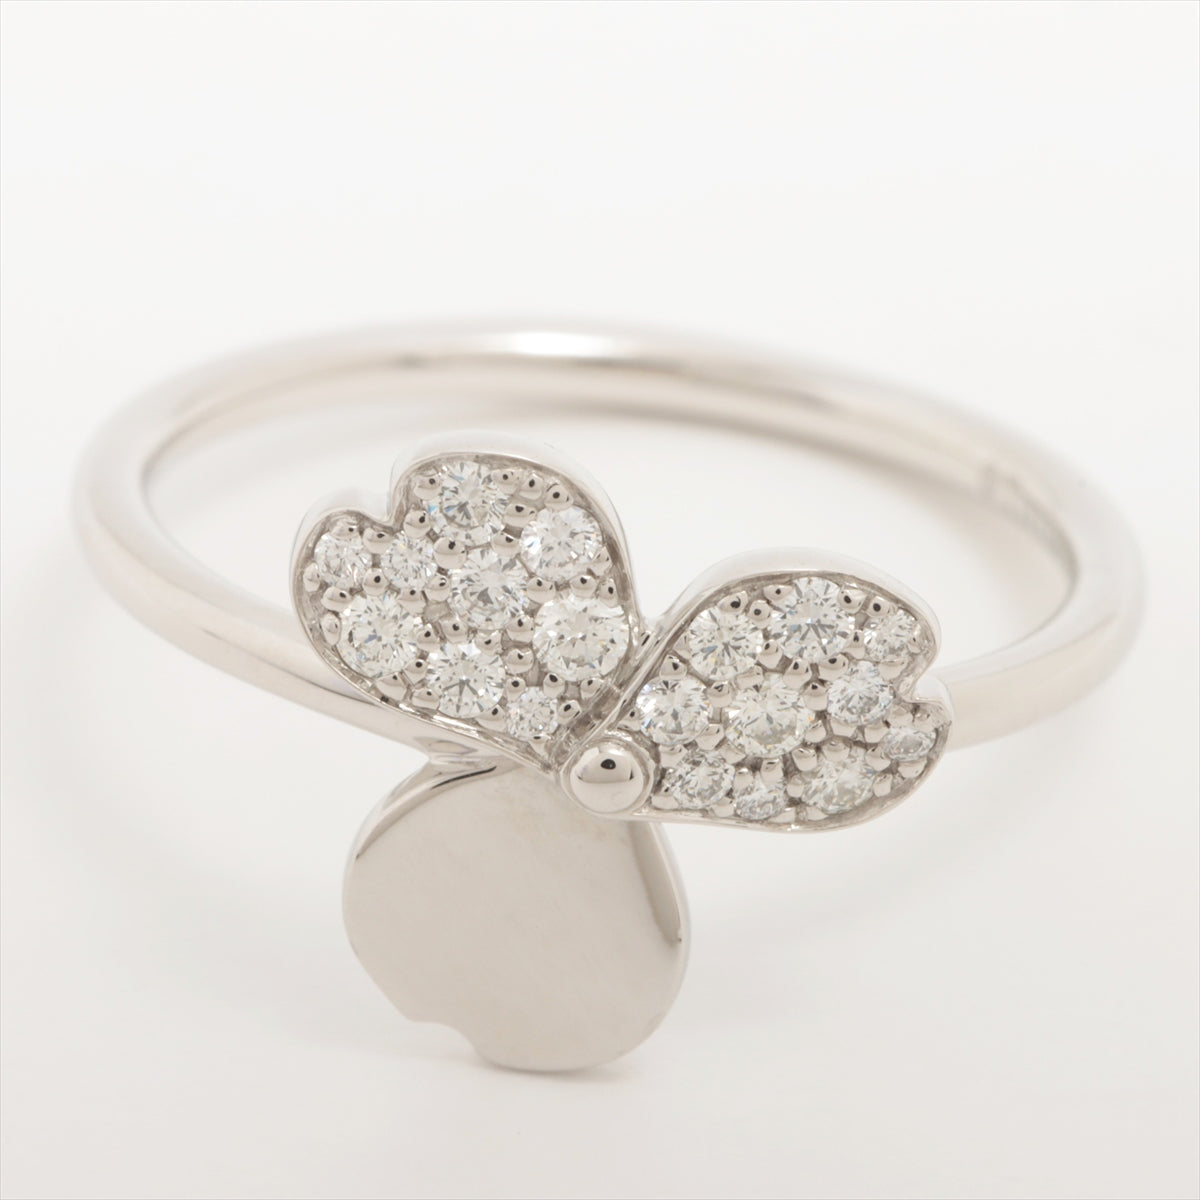 Tiffany Paper flowers diamond rings Pt950 4.0g